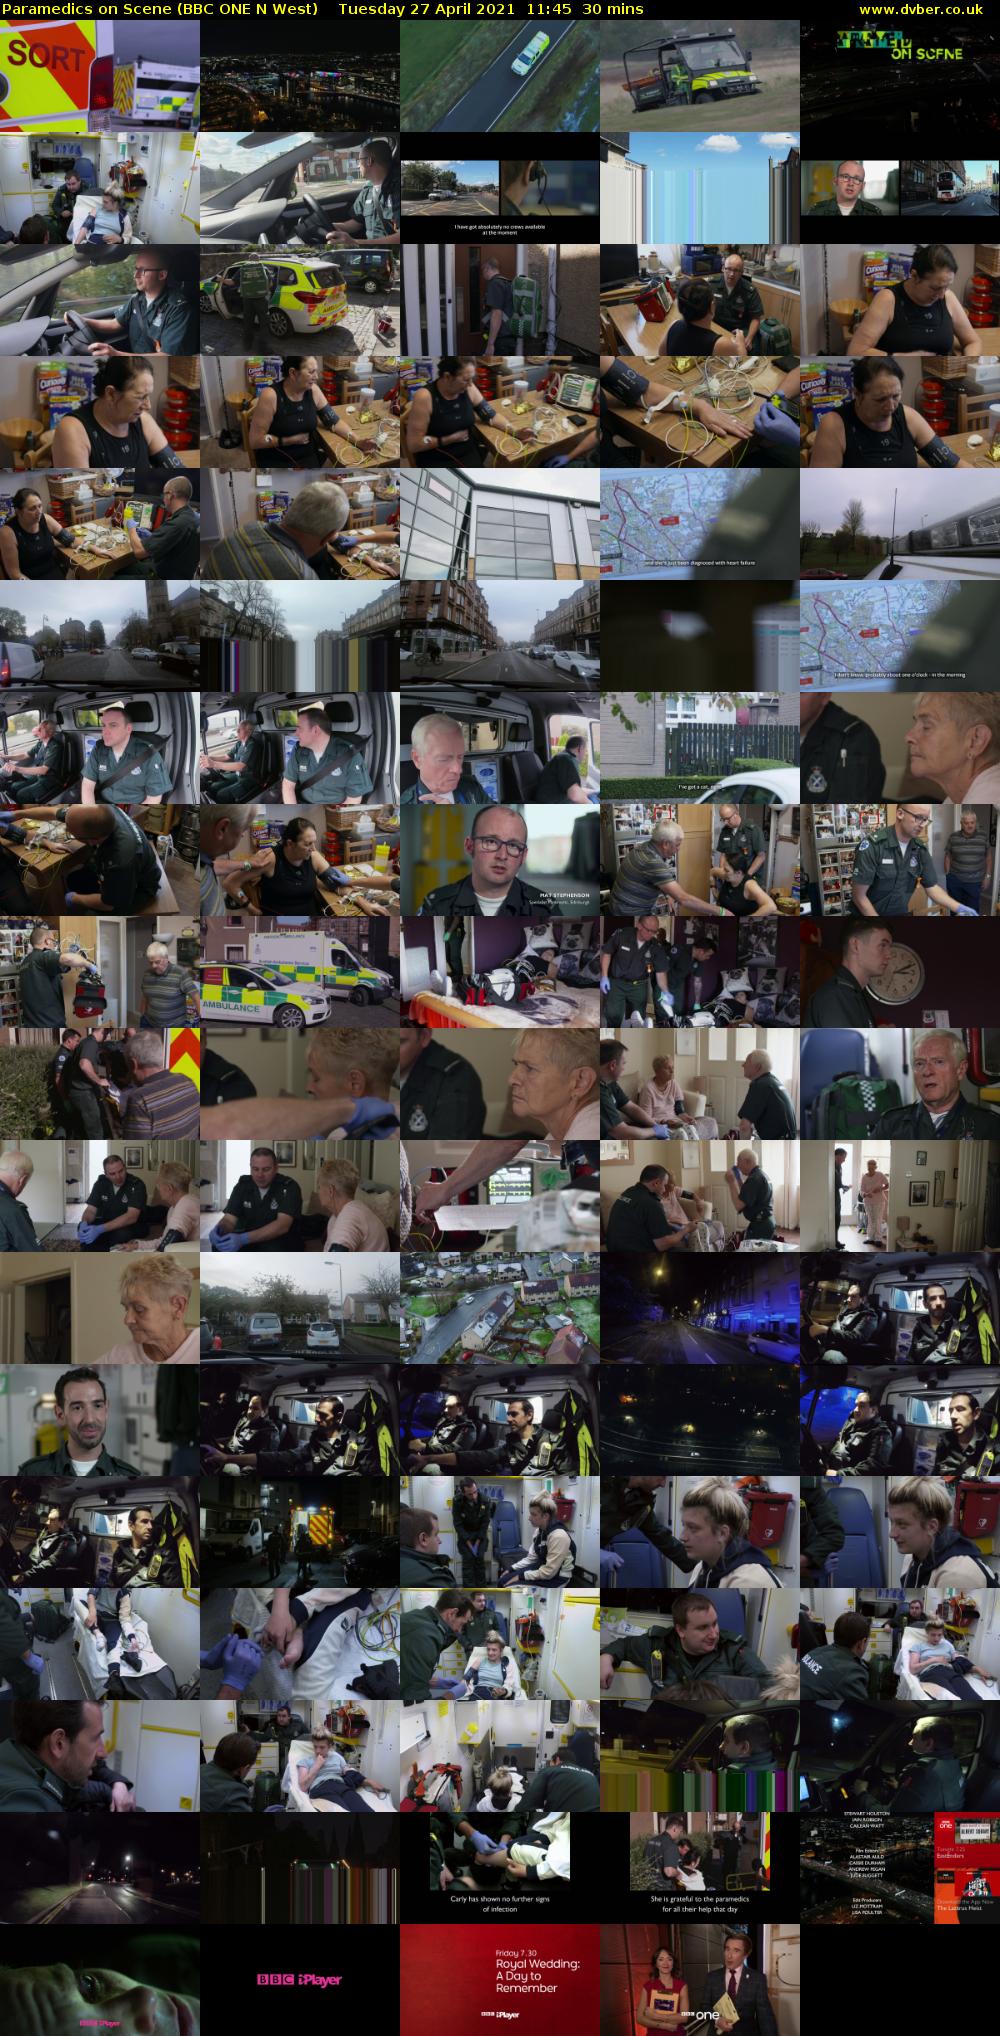 Paramedics on Scene (BBC ONE N West) Tuesday 27 April 2021 11:45 - 12:15